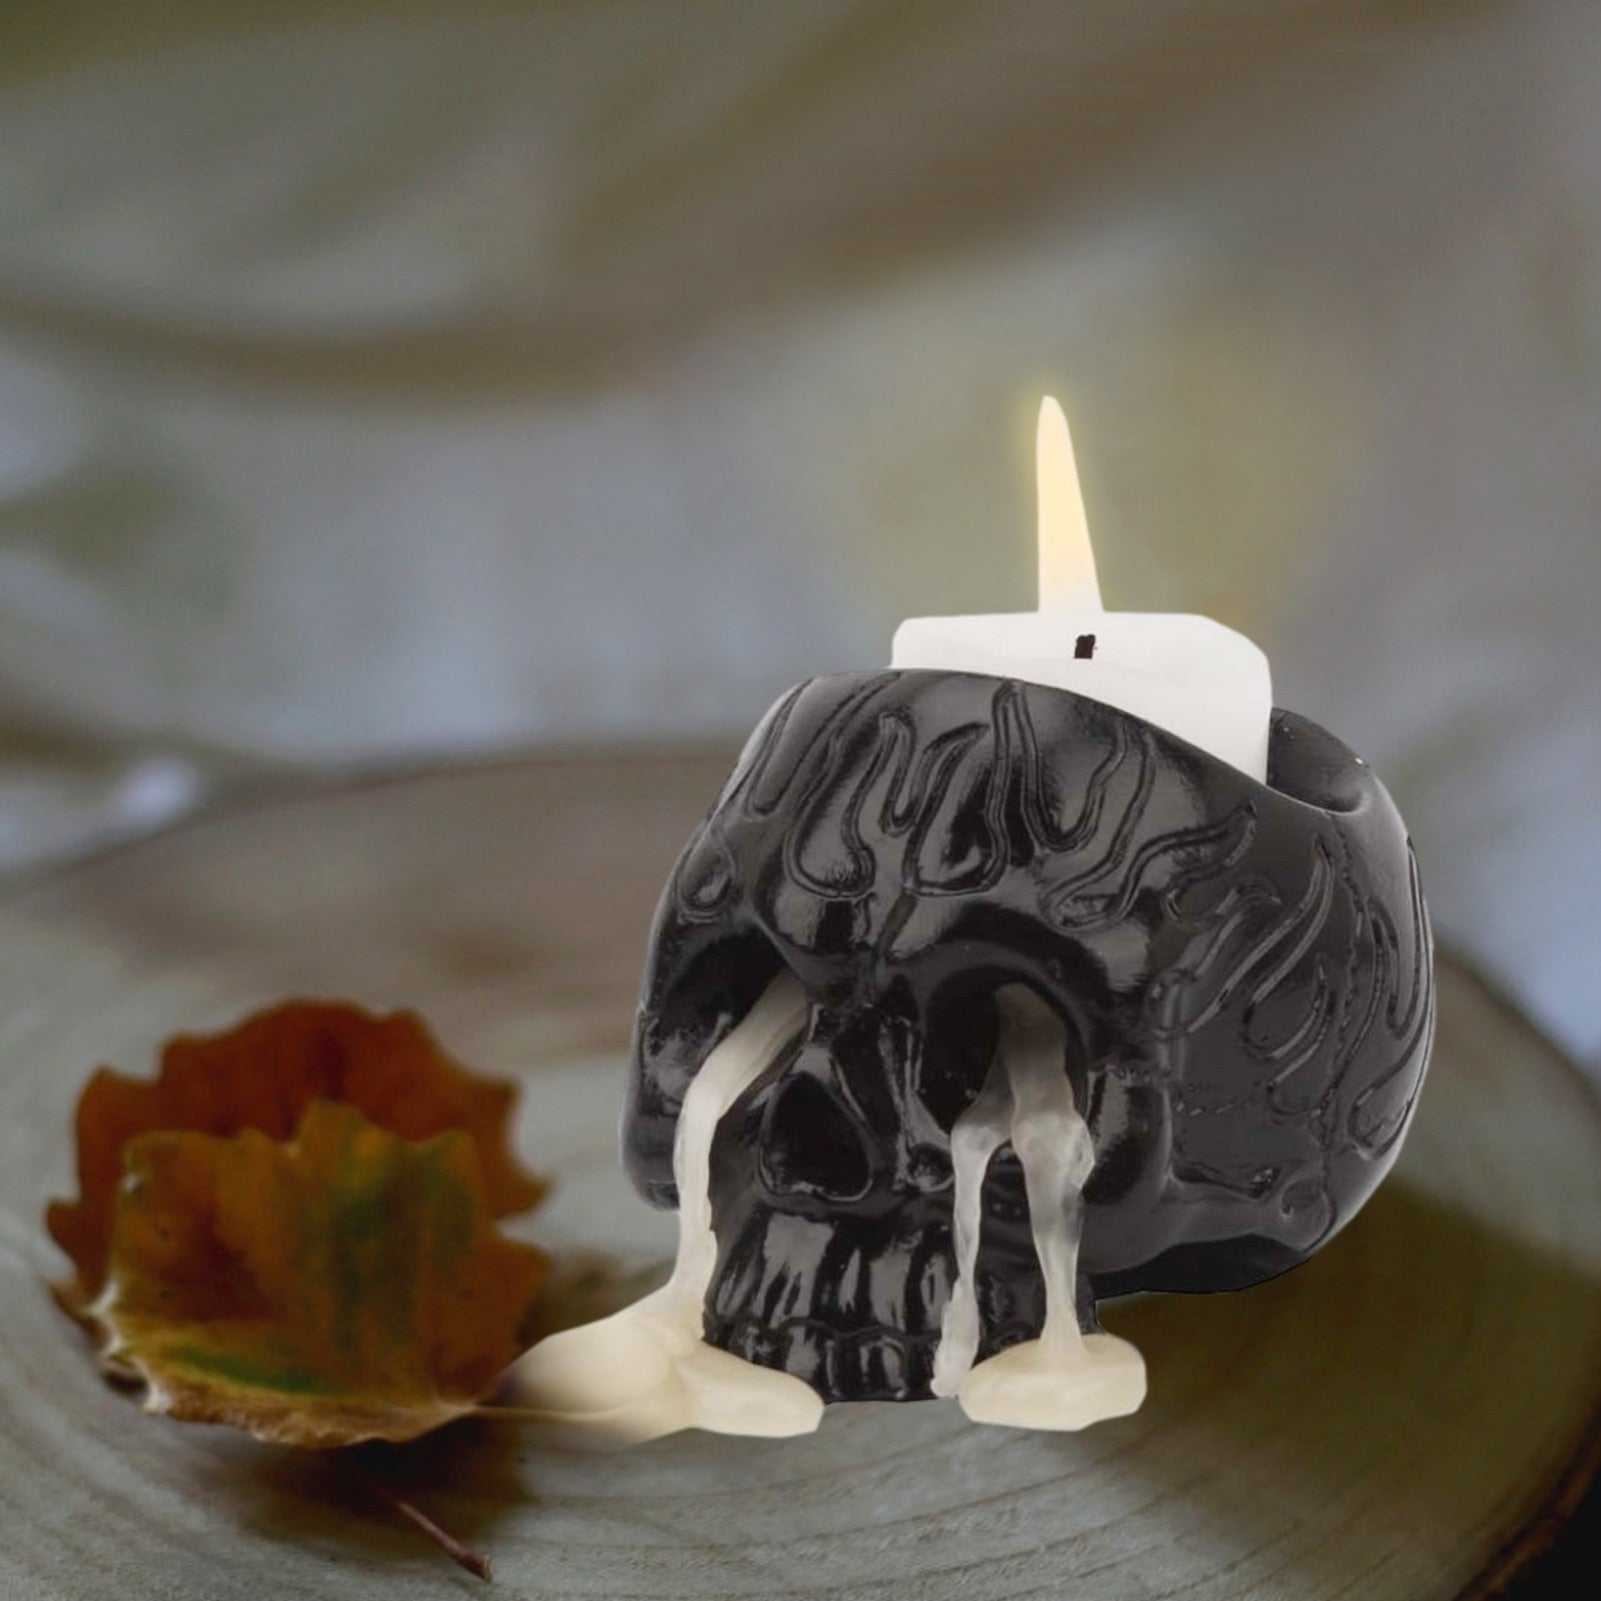 Novel Black Fire Pattern Skull Candle Holder Resin Candlestick Crafts Dec Handicraft Decoration Small Ornaments - DragonHearth